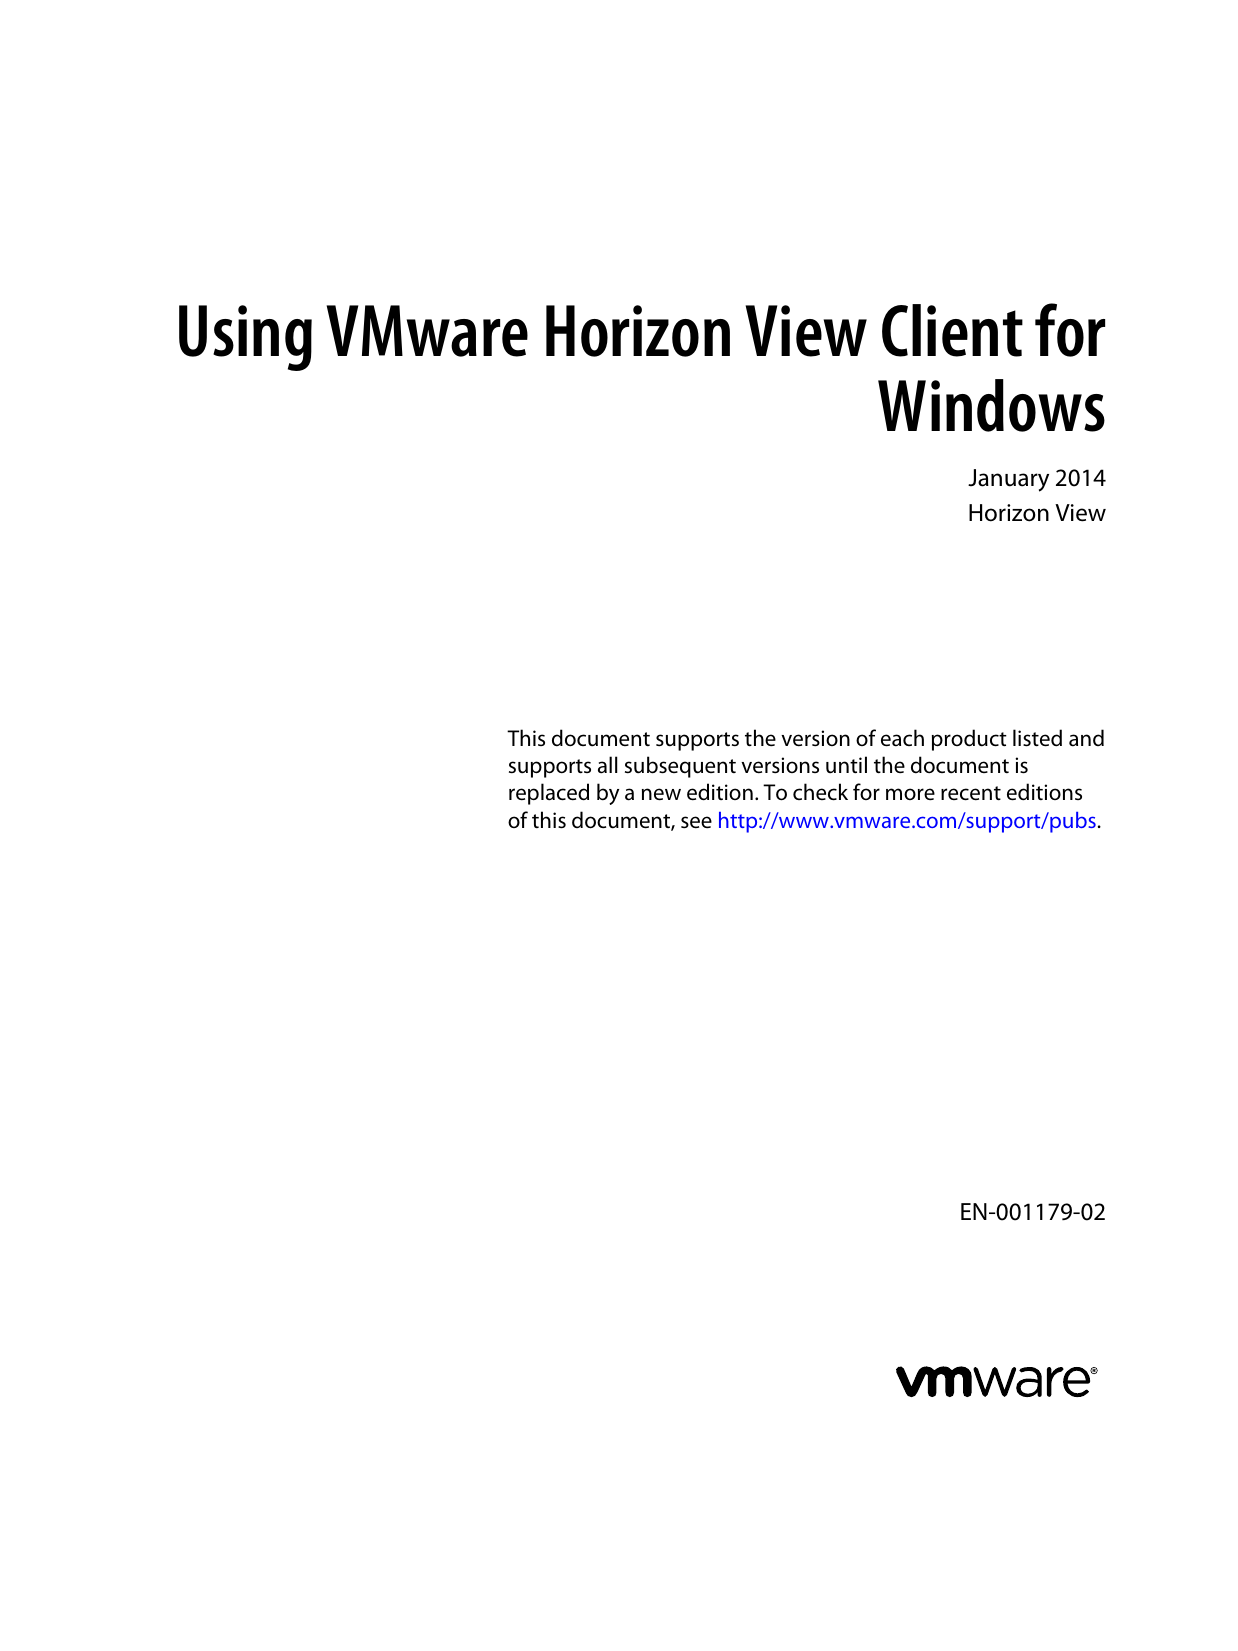 vmware horizon view client instructions